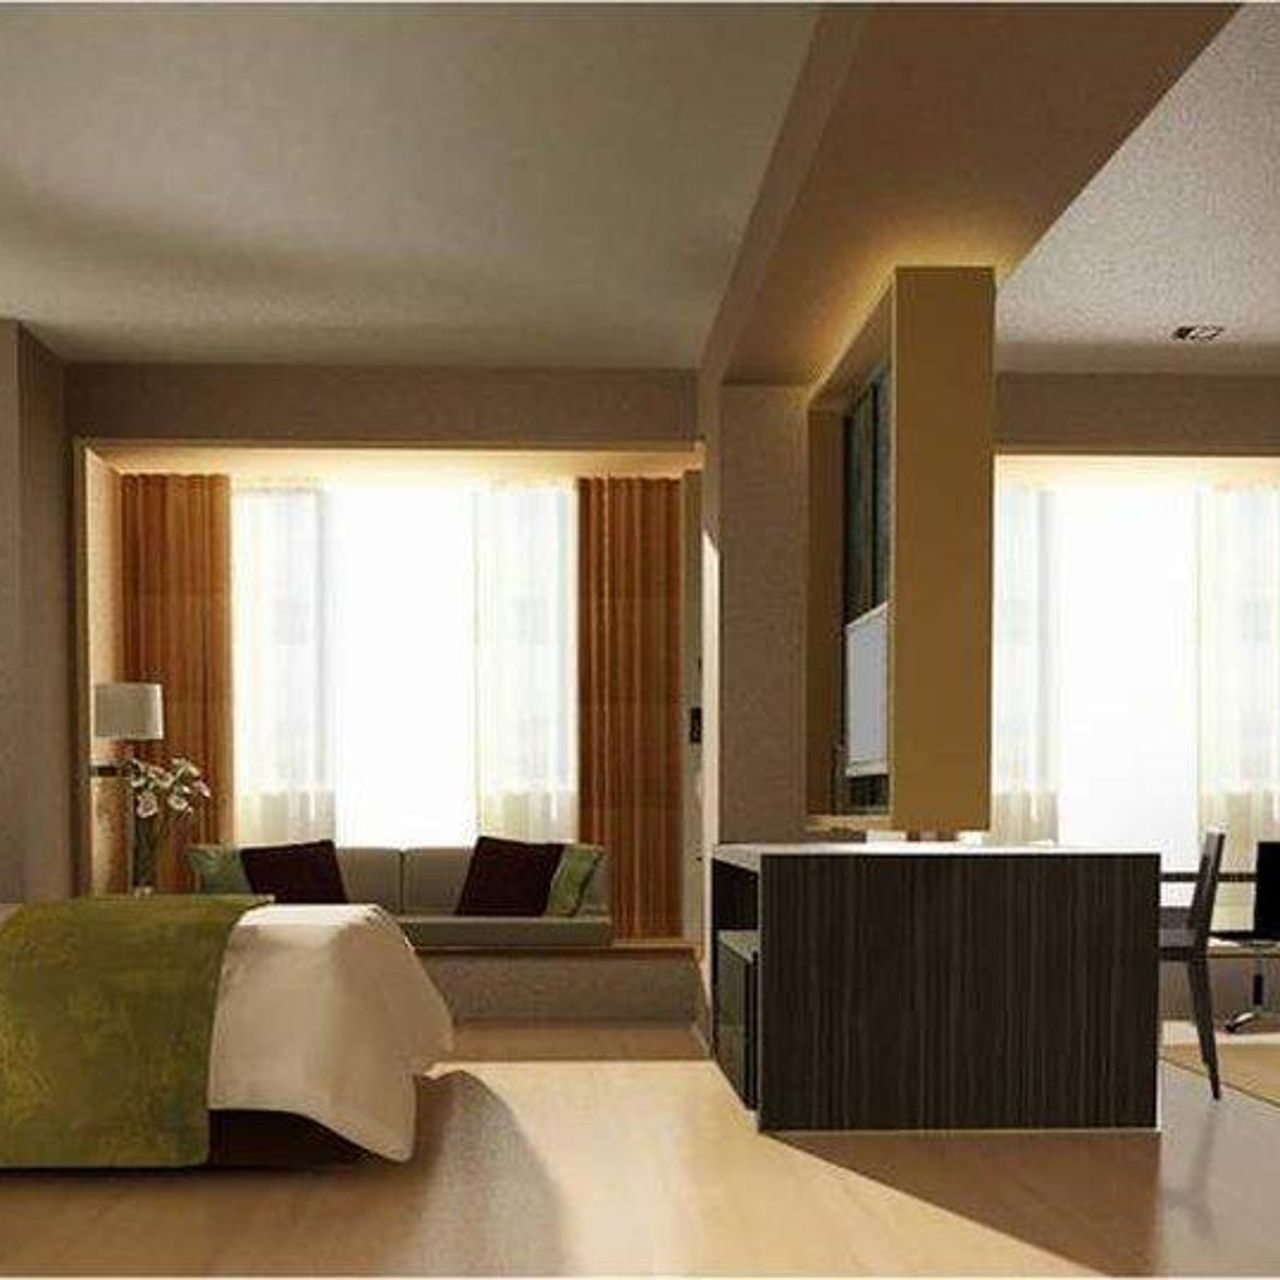 Davanam Sarovar Portico Suites Rooms: Pictures & Reviews - Tripadvisor